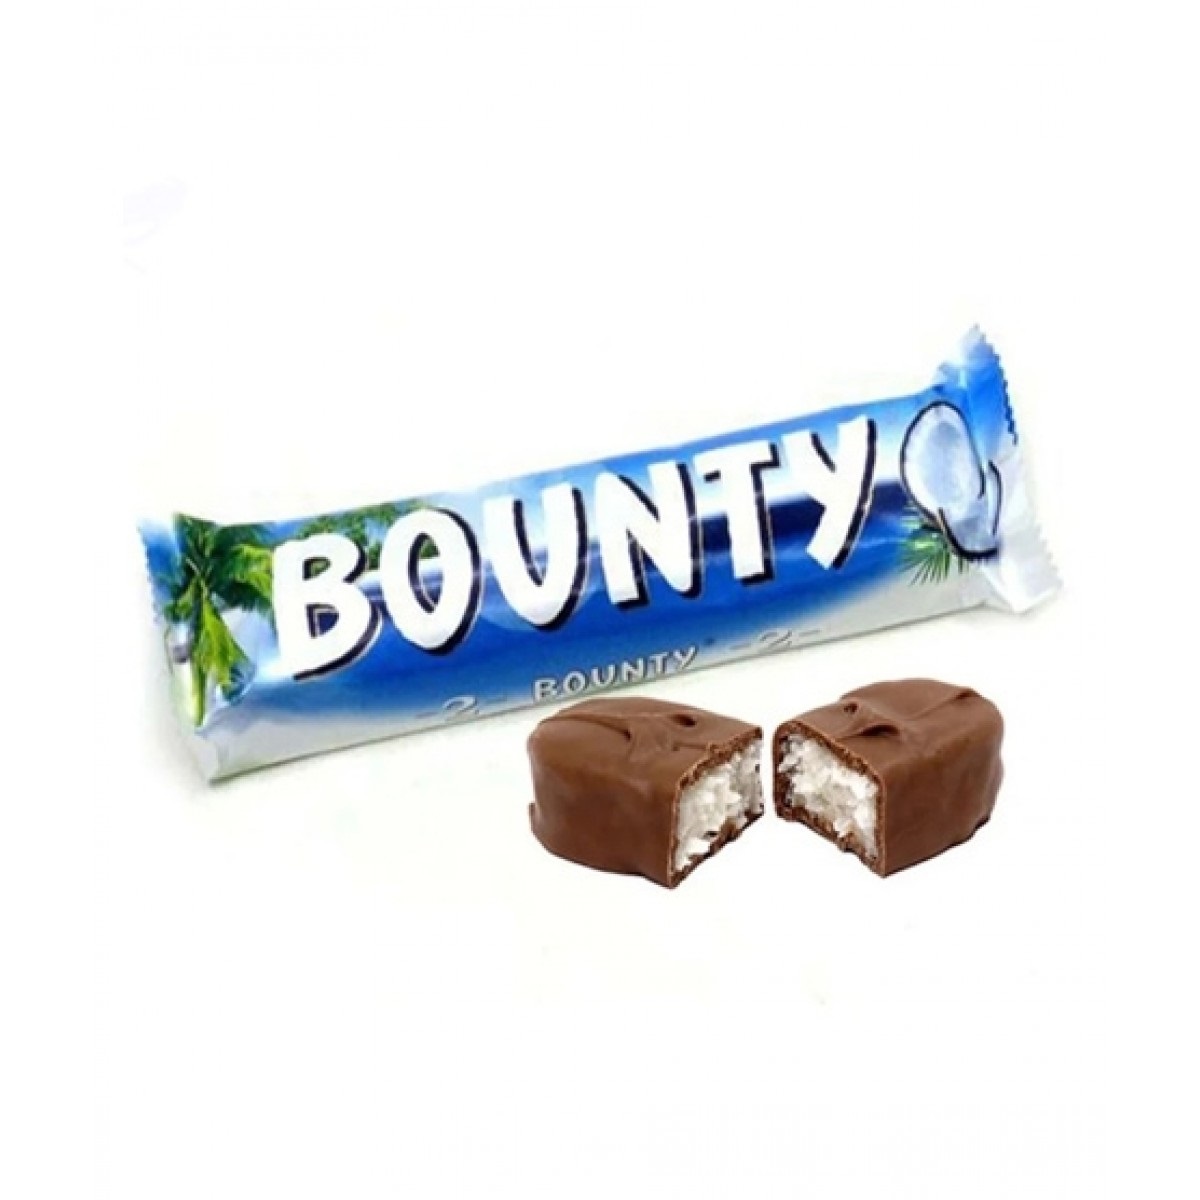 Bounty Chocolate - 57g